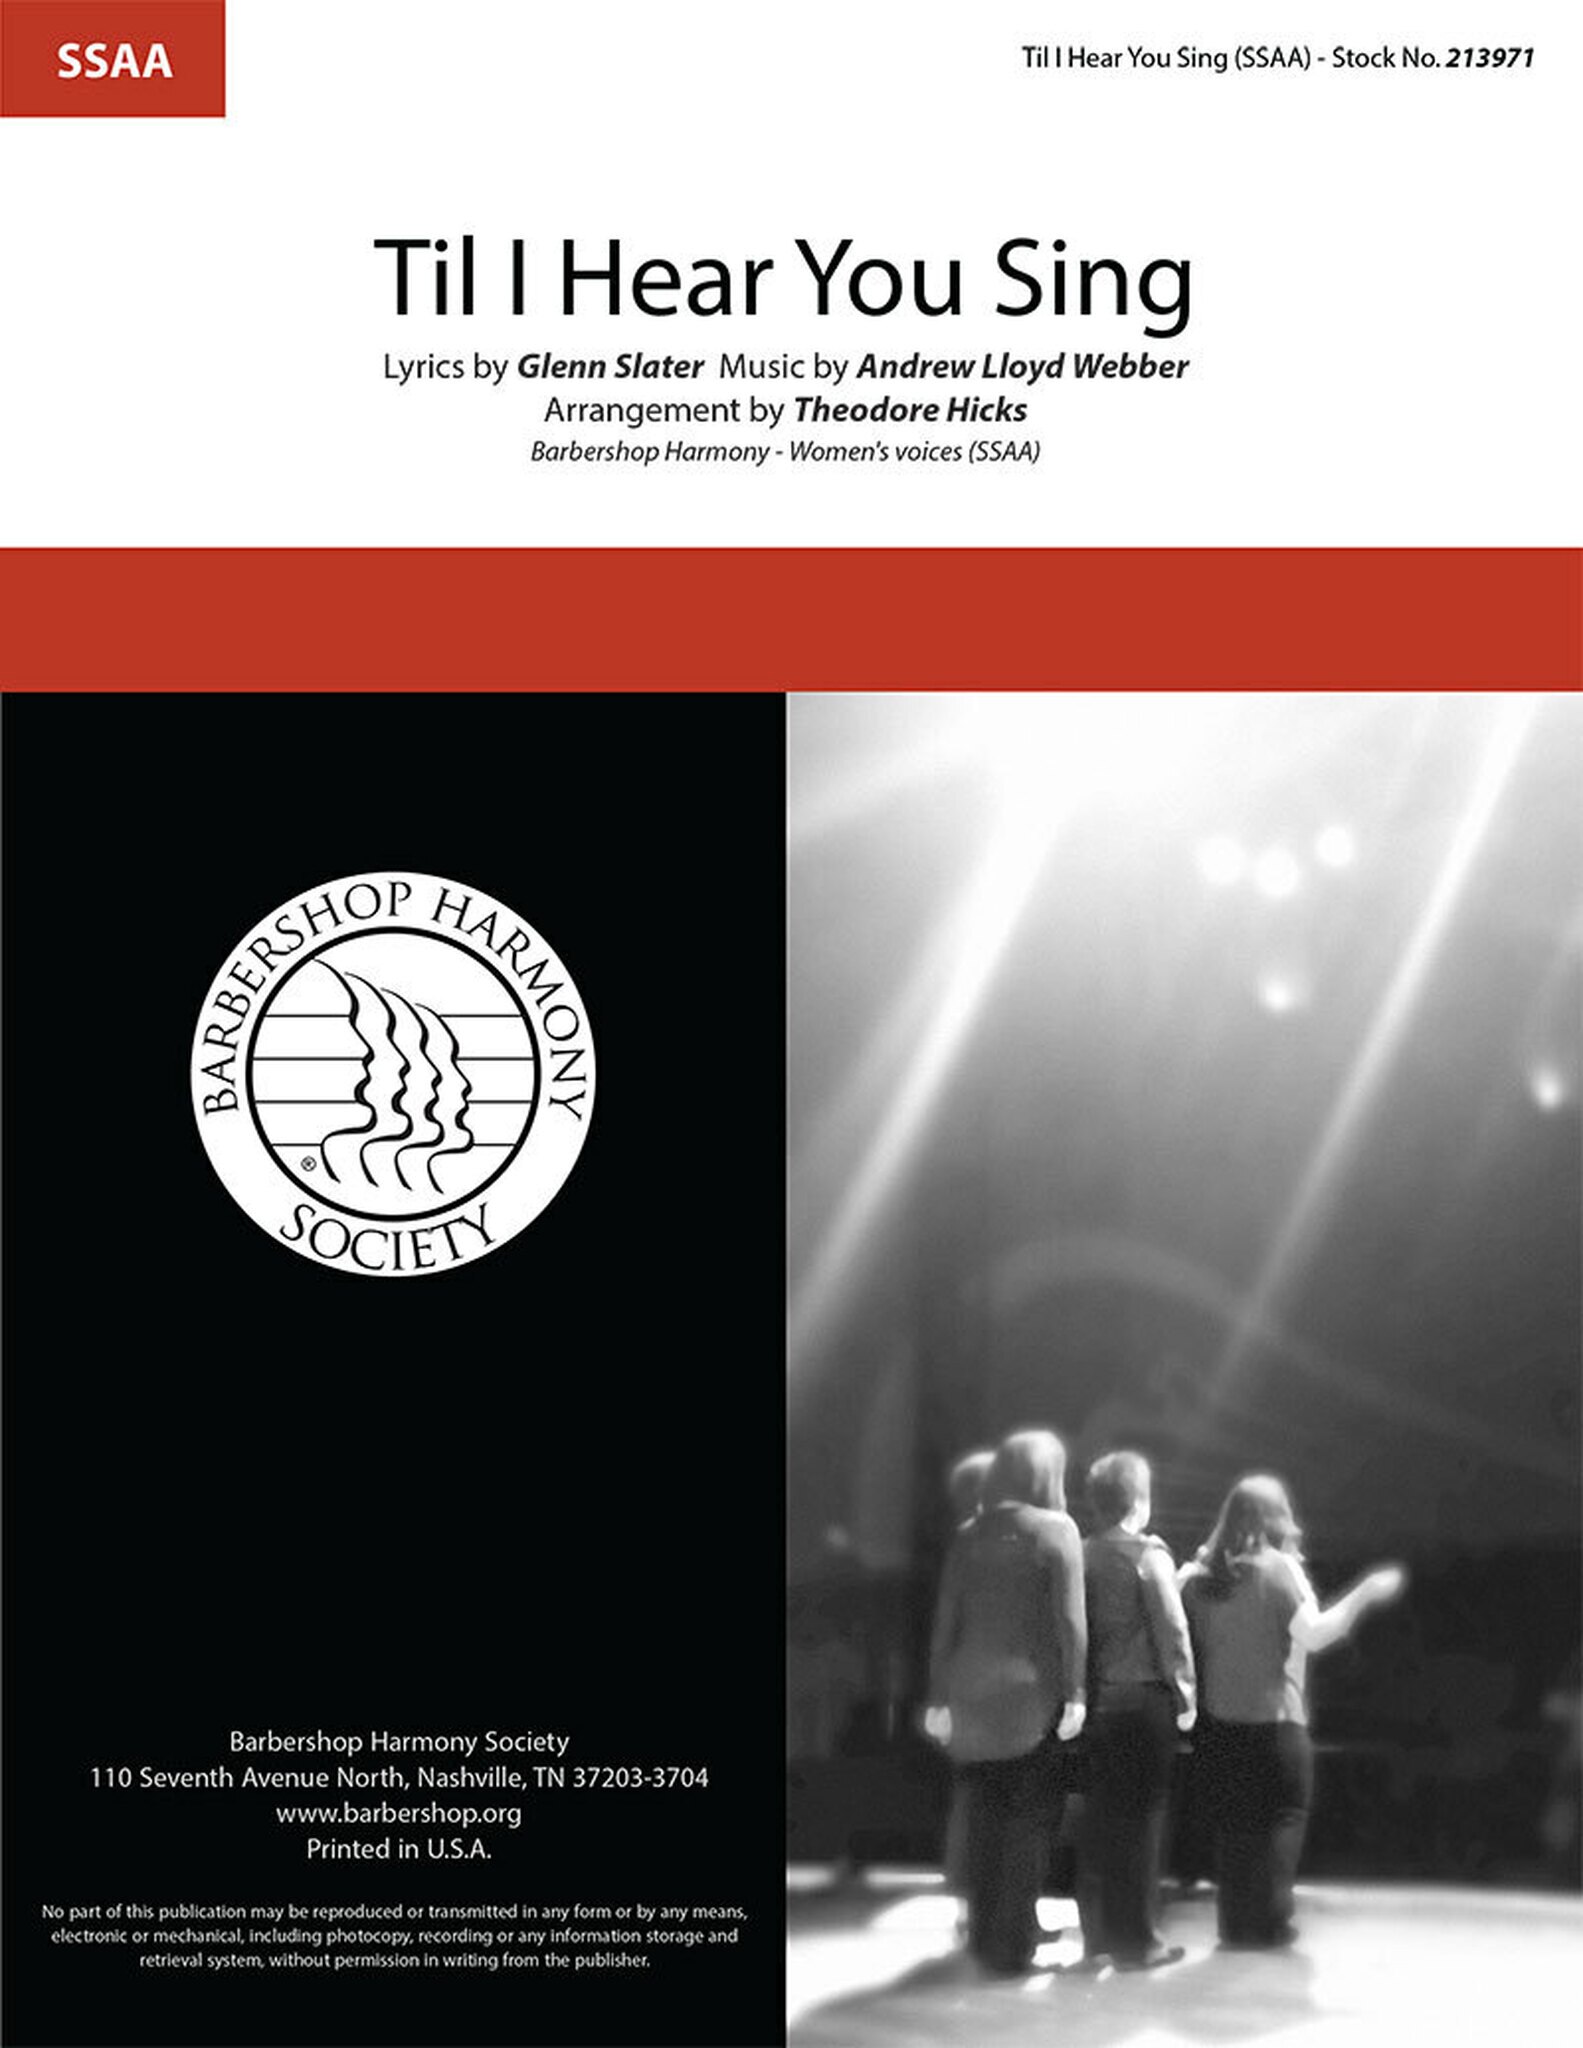 'Til I Hear You Sing : SSAA : Theo Hicks : Love Never Dies : Digital : 1000368662